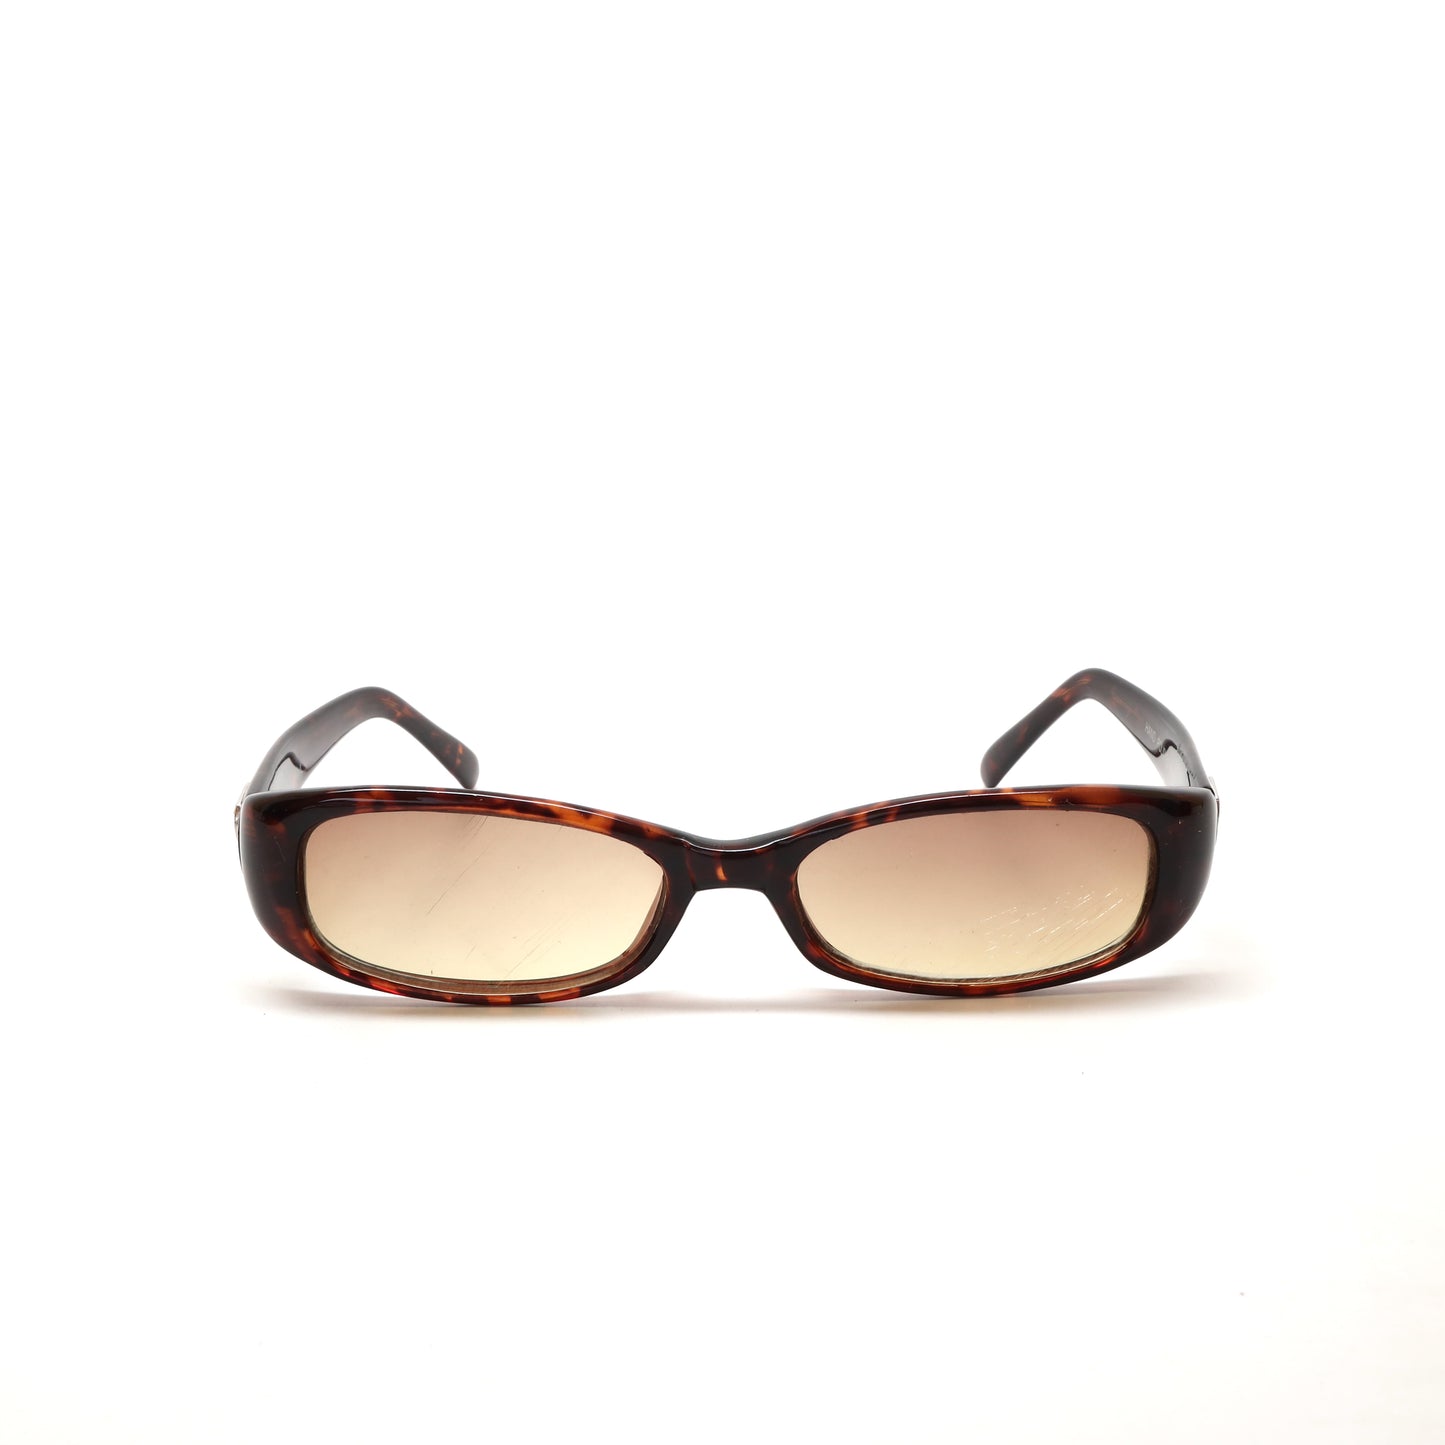 Vintage Small Size 90s Deadstock Rectangle Sunglasses - Tortoise Tan